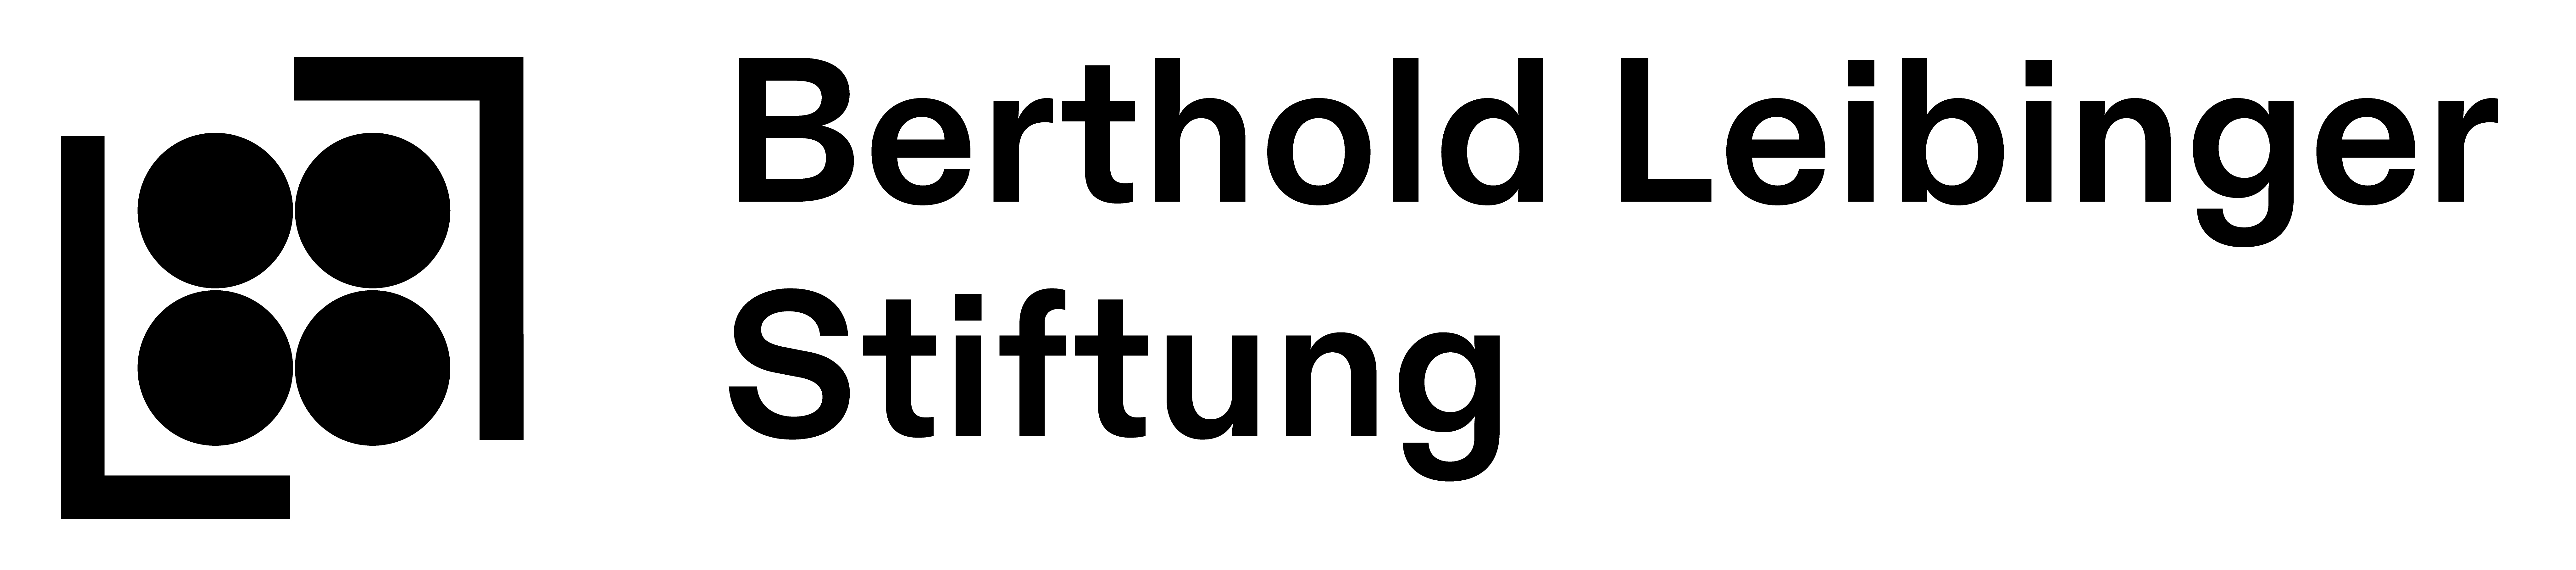 Berthold Leibinger Stiftung